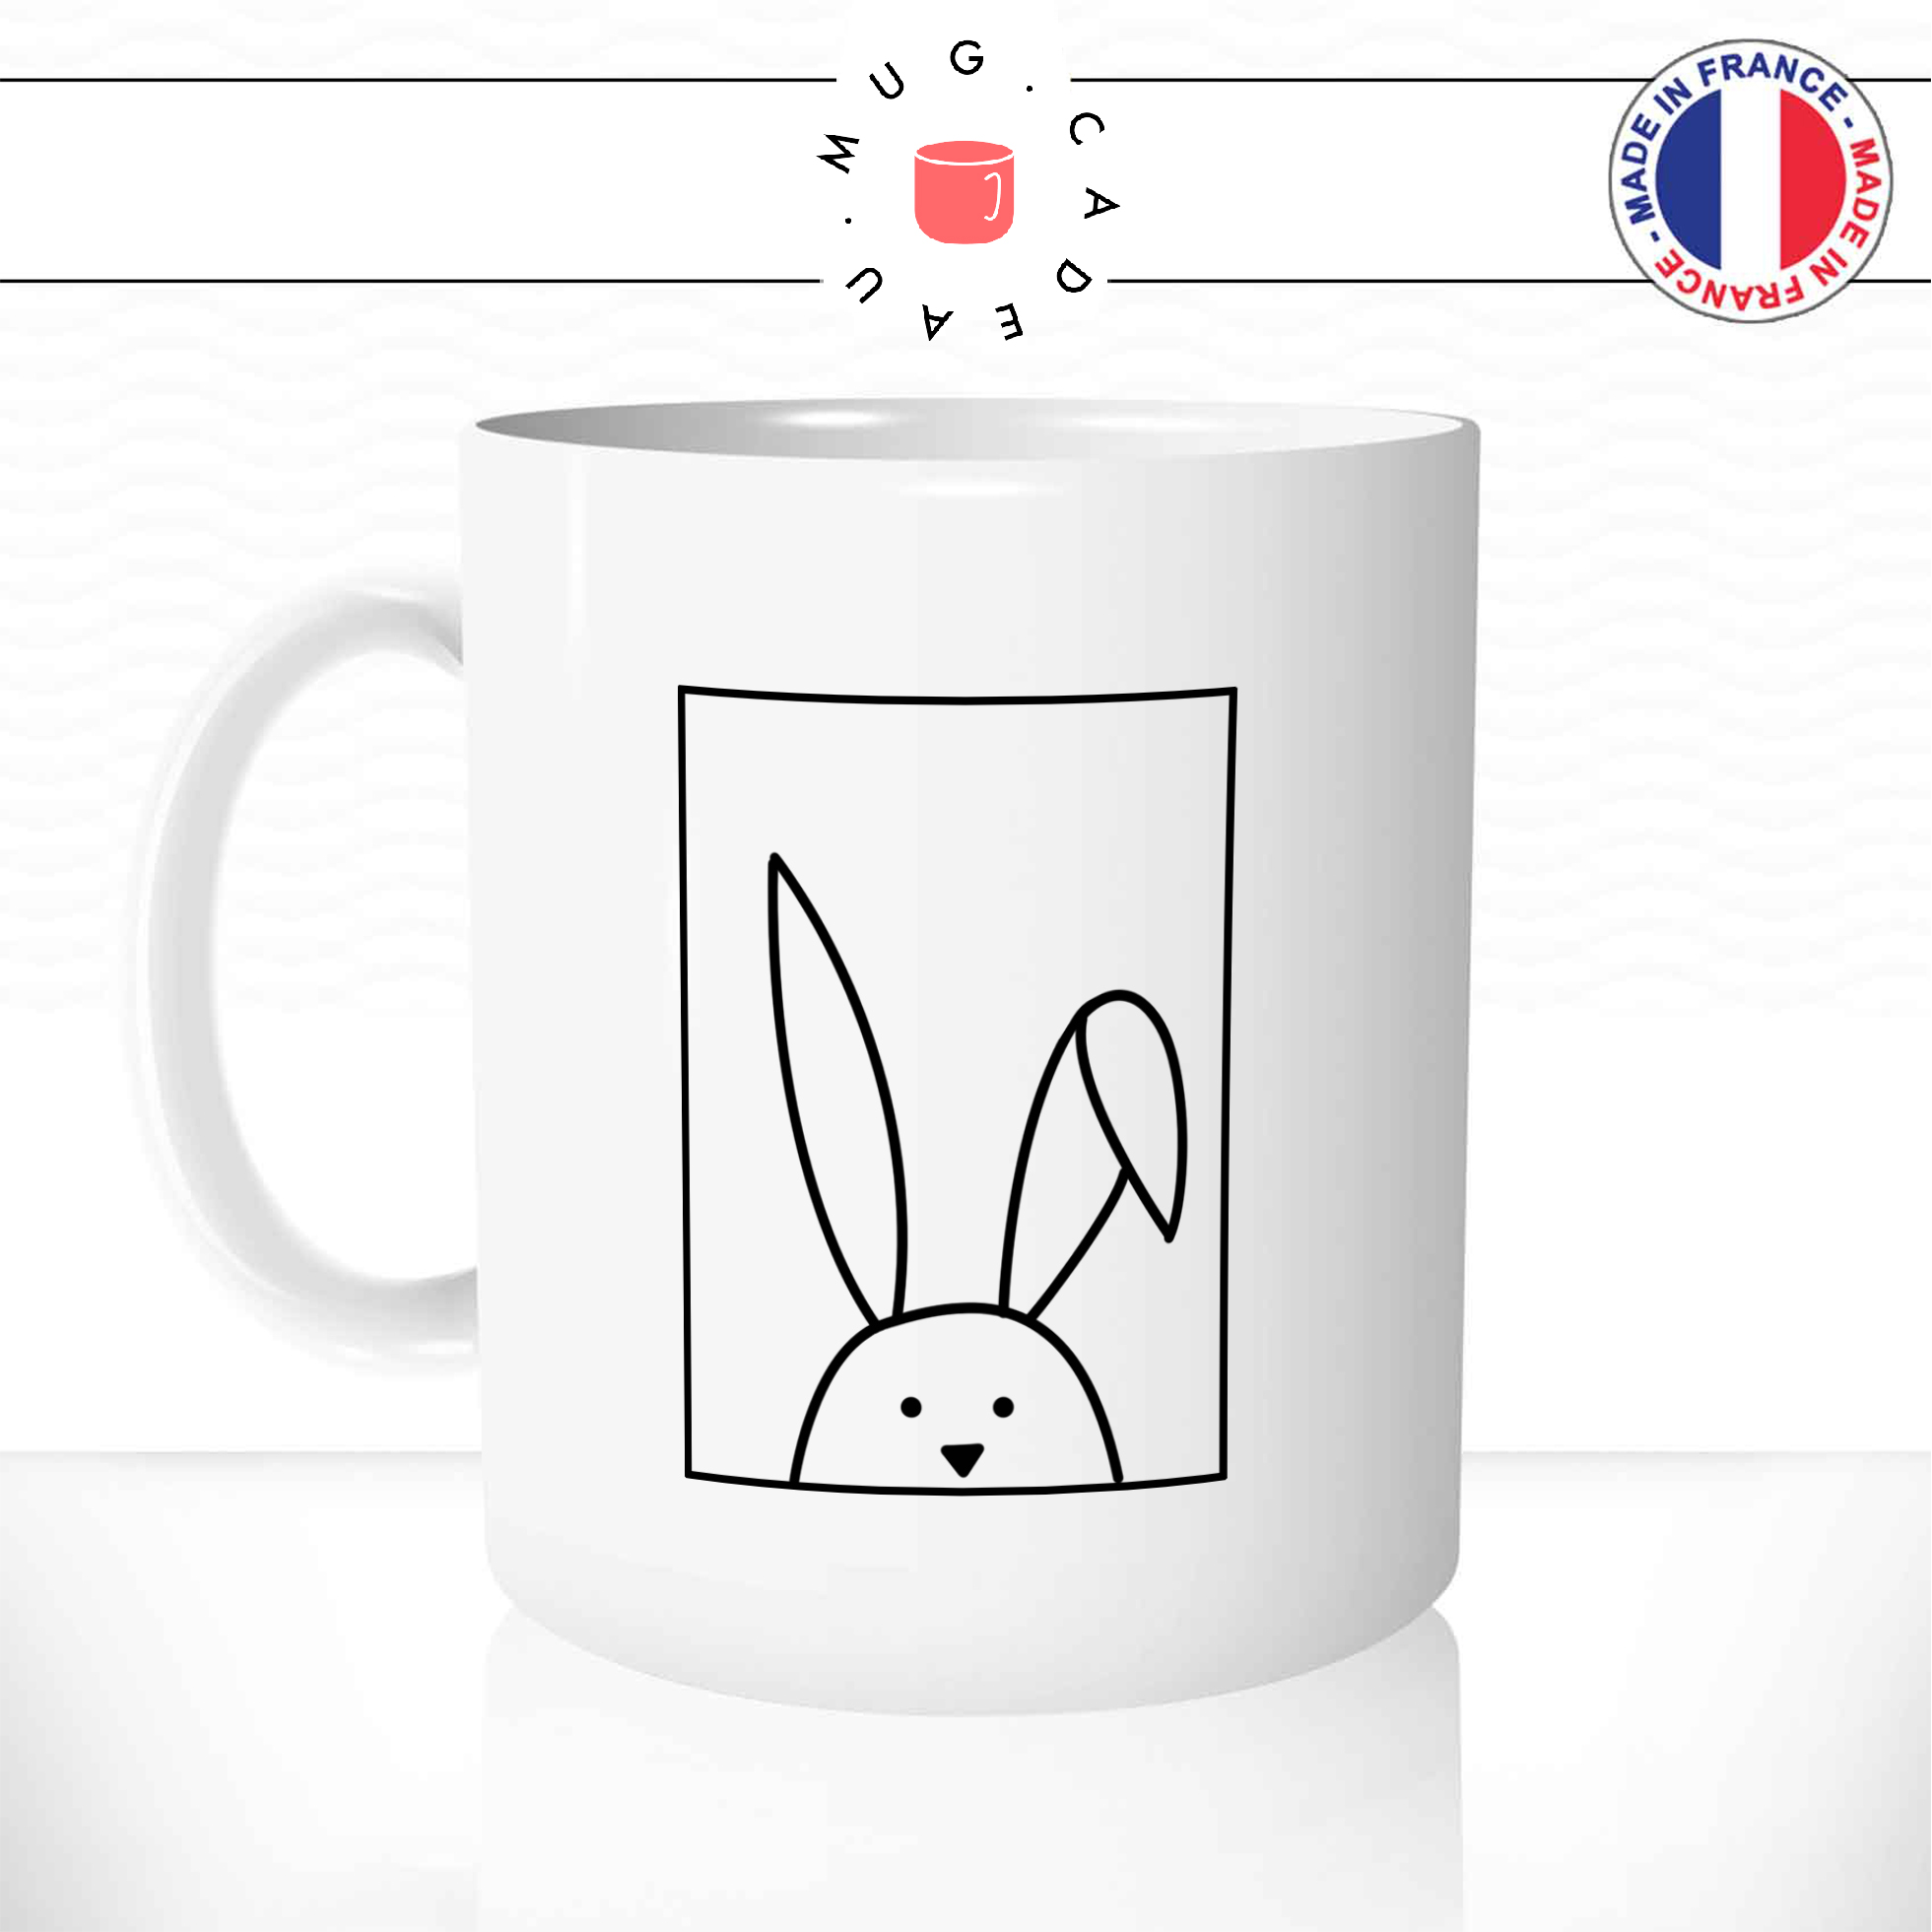 mug-tasse-ref5-lapin-dessin-noir-carre-cafe-oreilles-tete-cafe-the-mugs-tasses-personnalise-anse-gauche